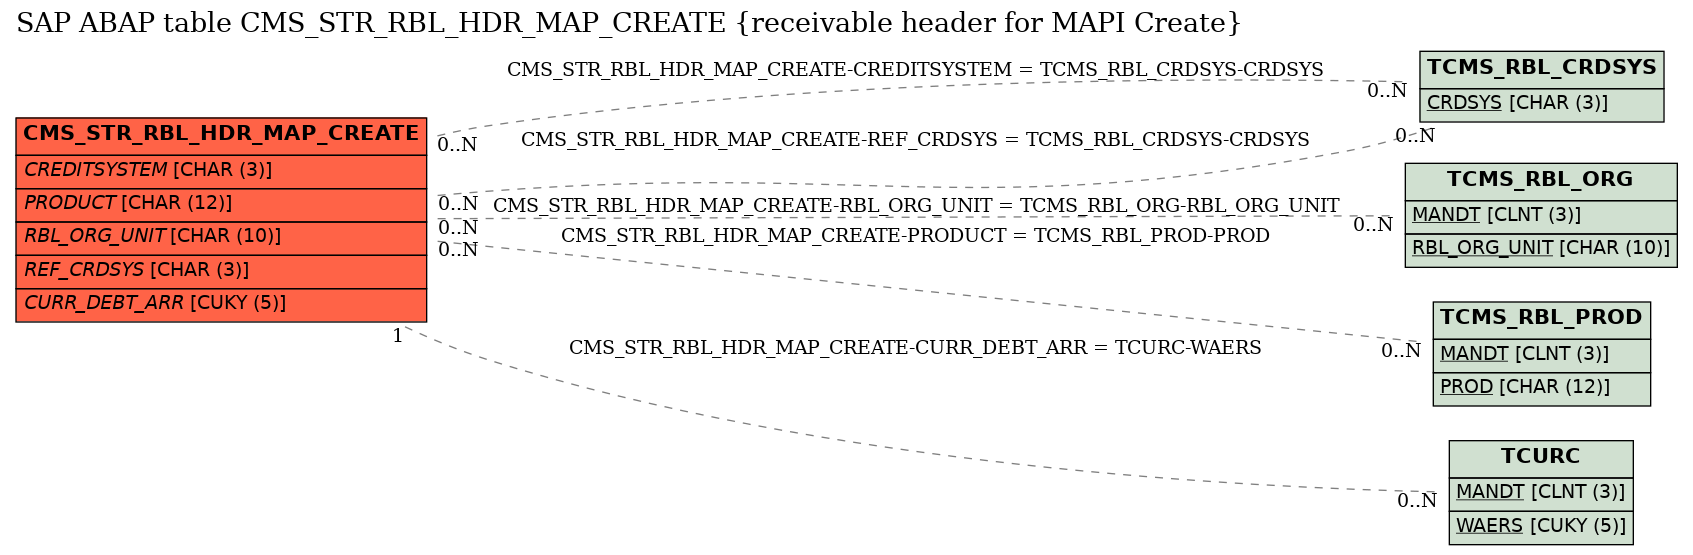 E-R Diagram for table CMS_STR_RBL_HDR_MAP_CREATE (receivable header for MAPI Create)